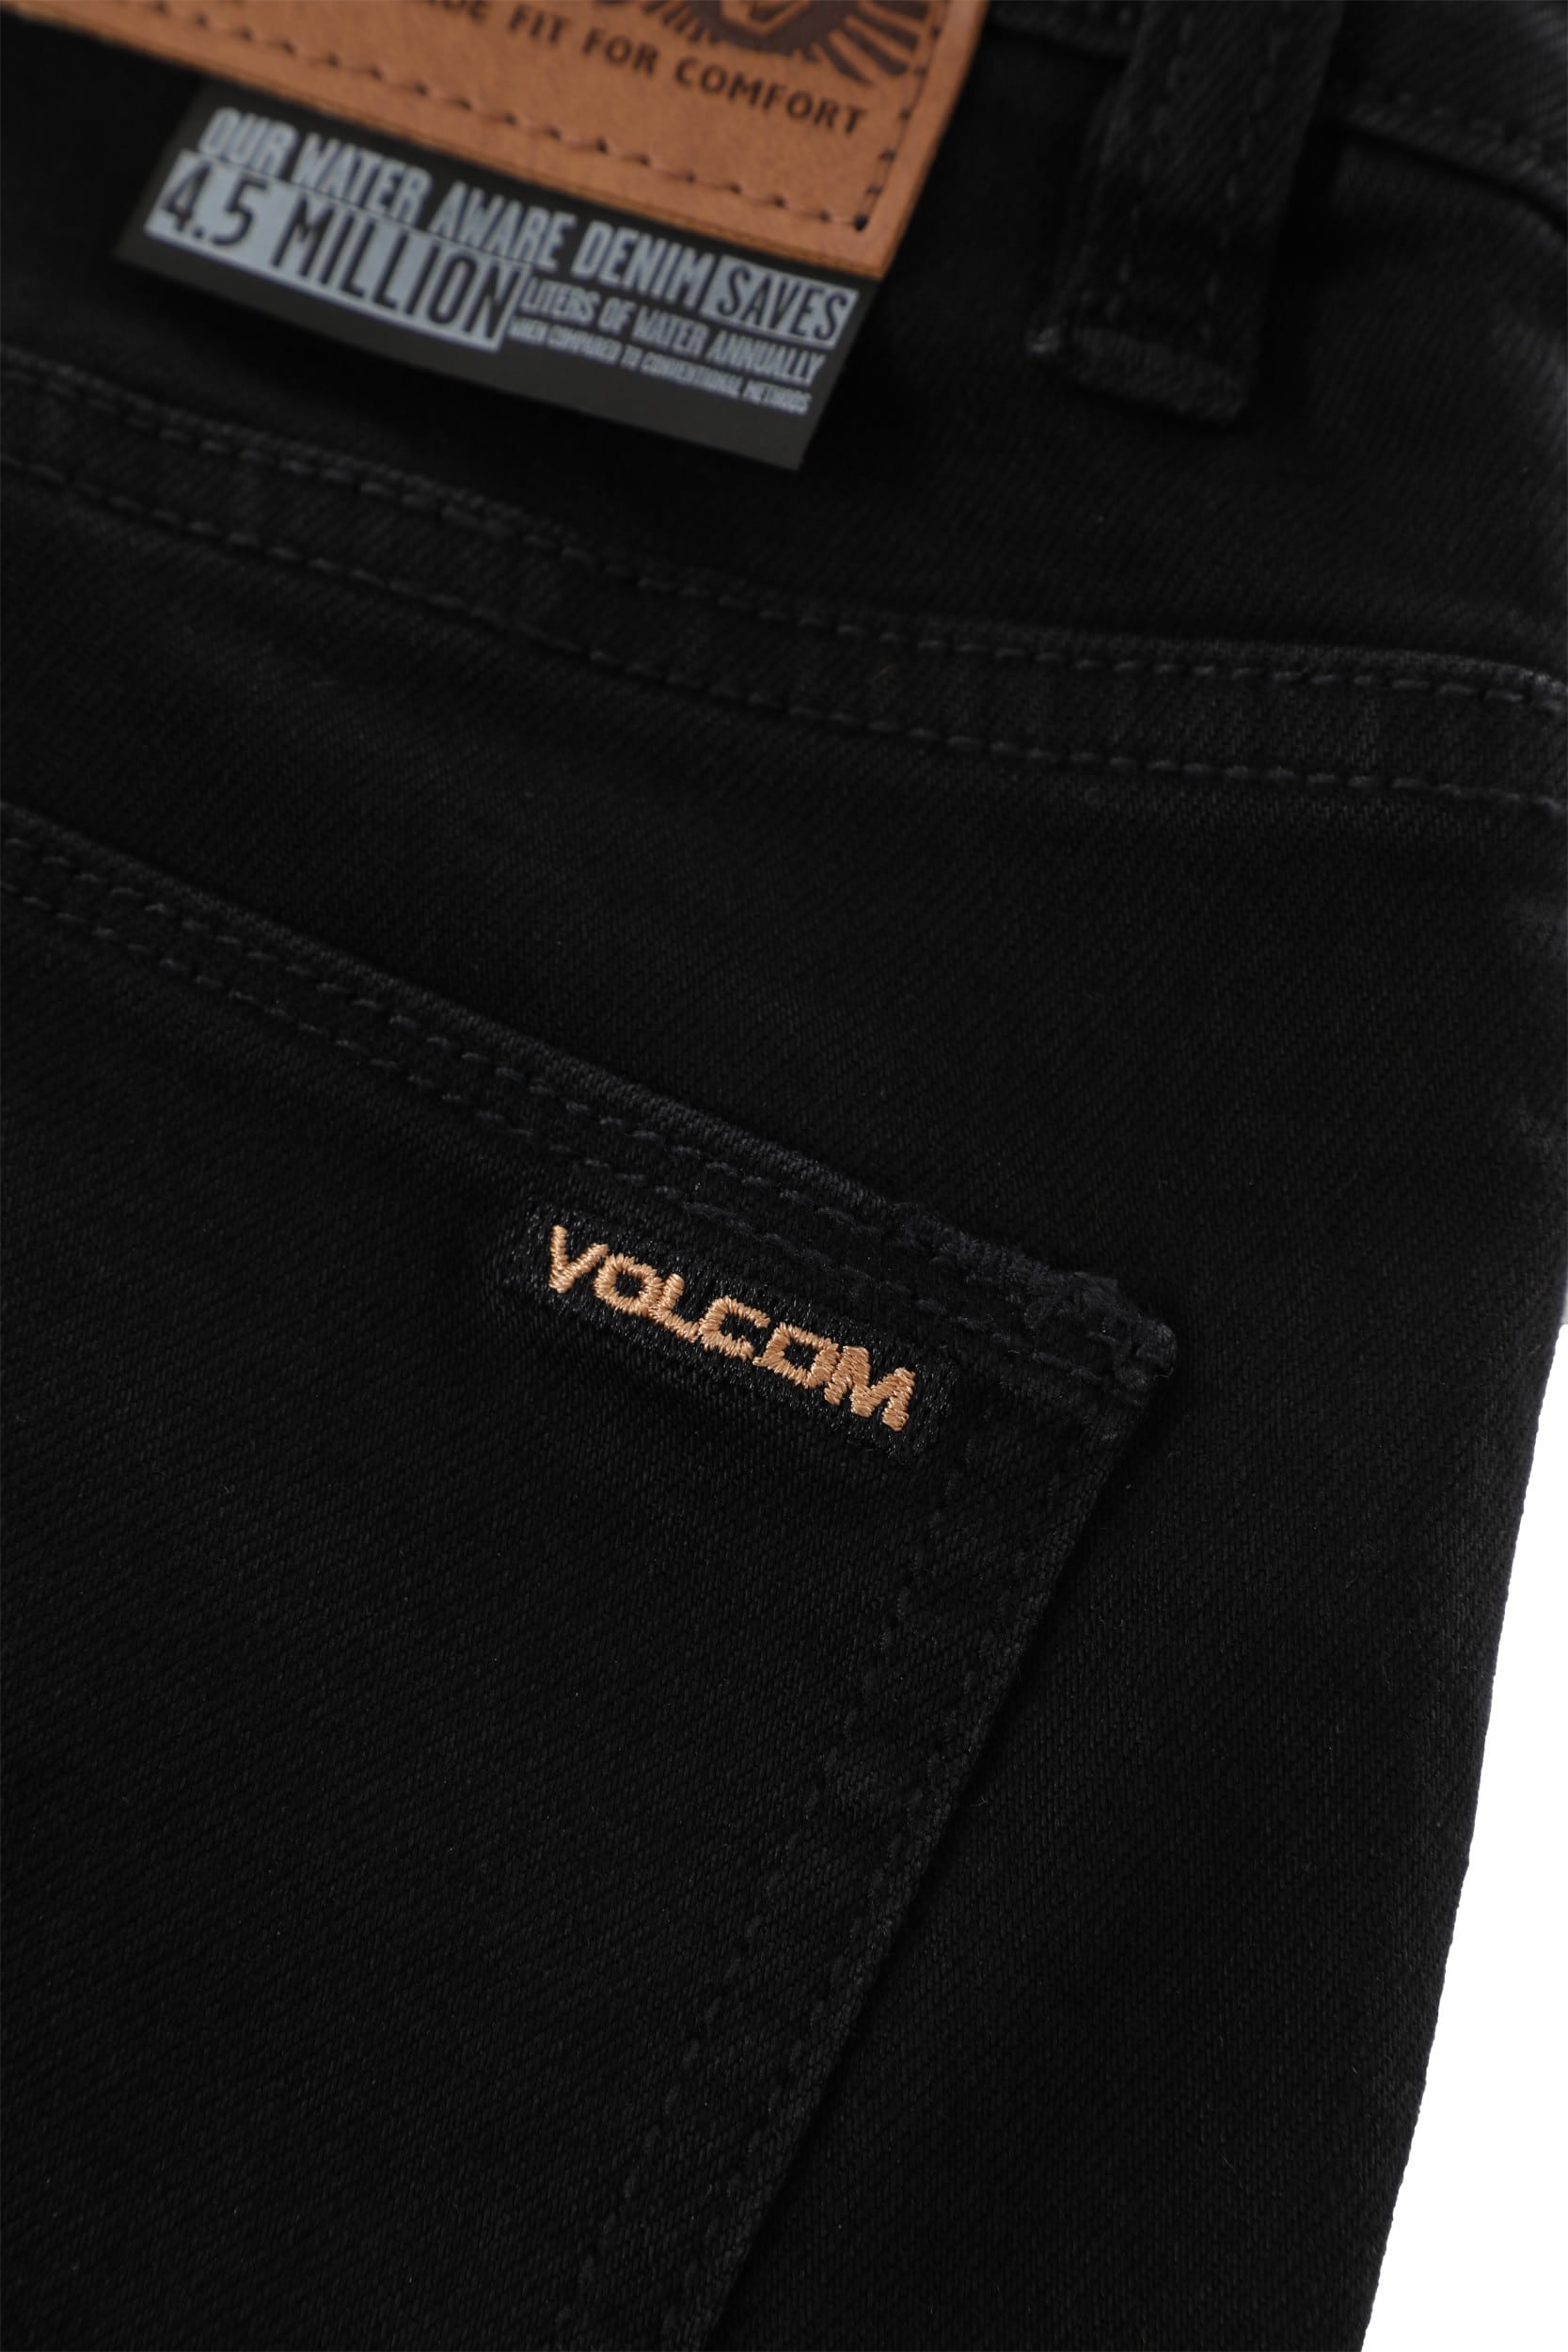 Volcom Solver Jeans - blackout | Tactics